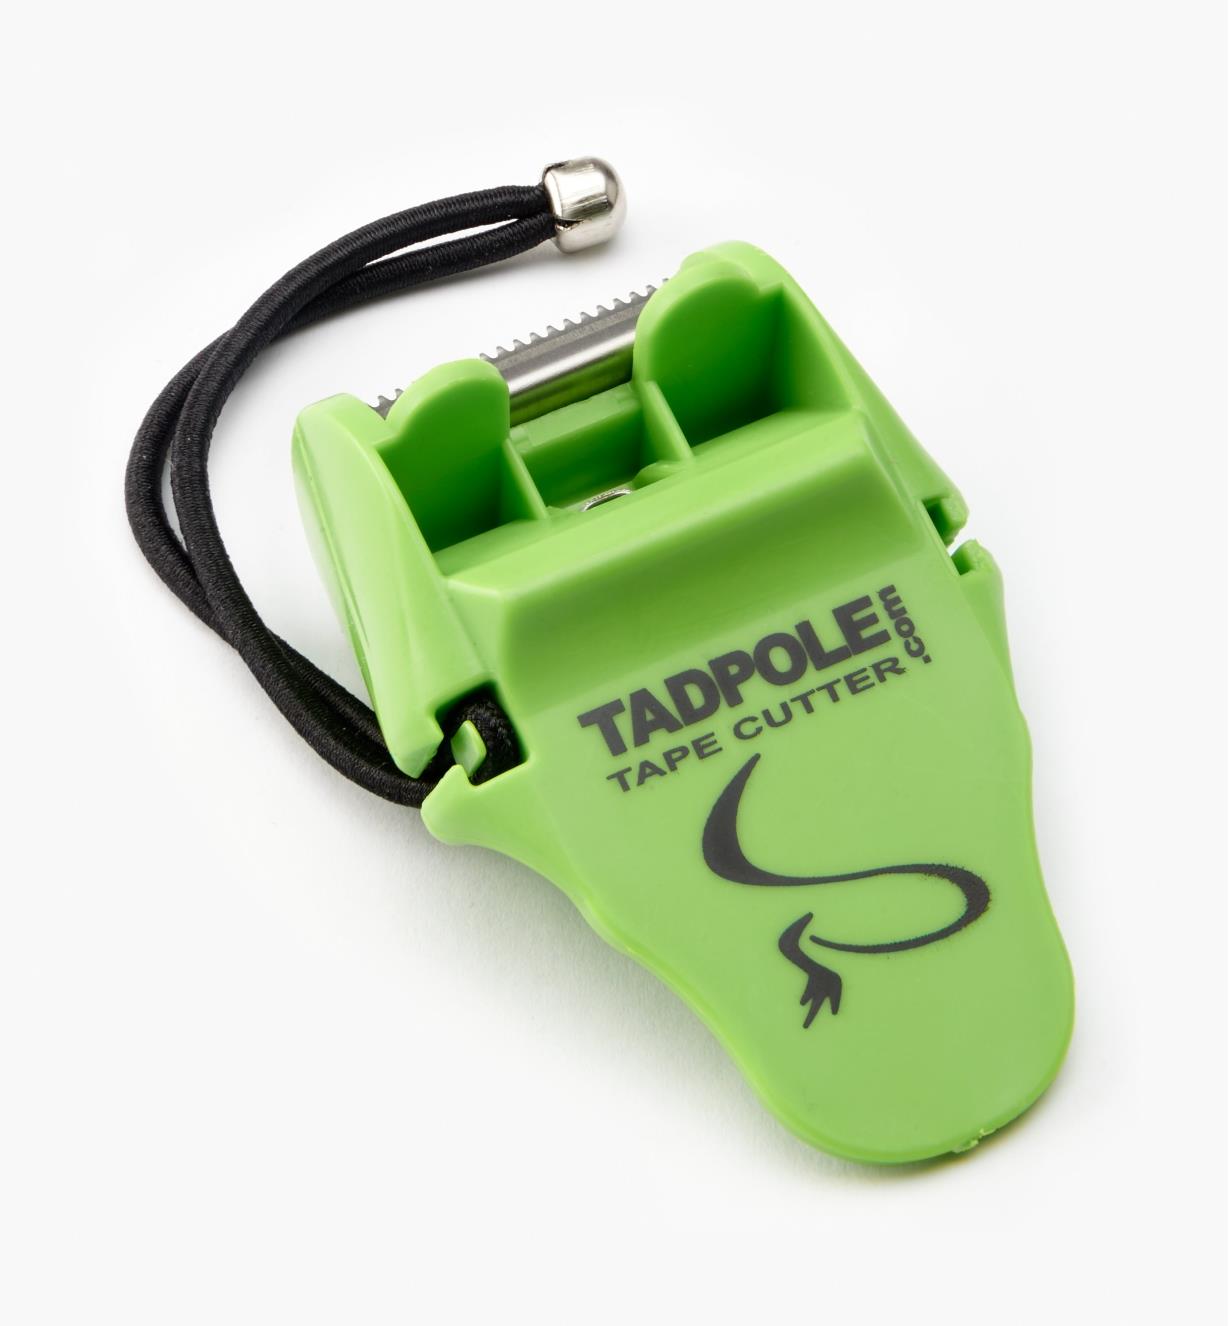 25U0610 - Tadpole Tape Cutter, 1"